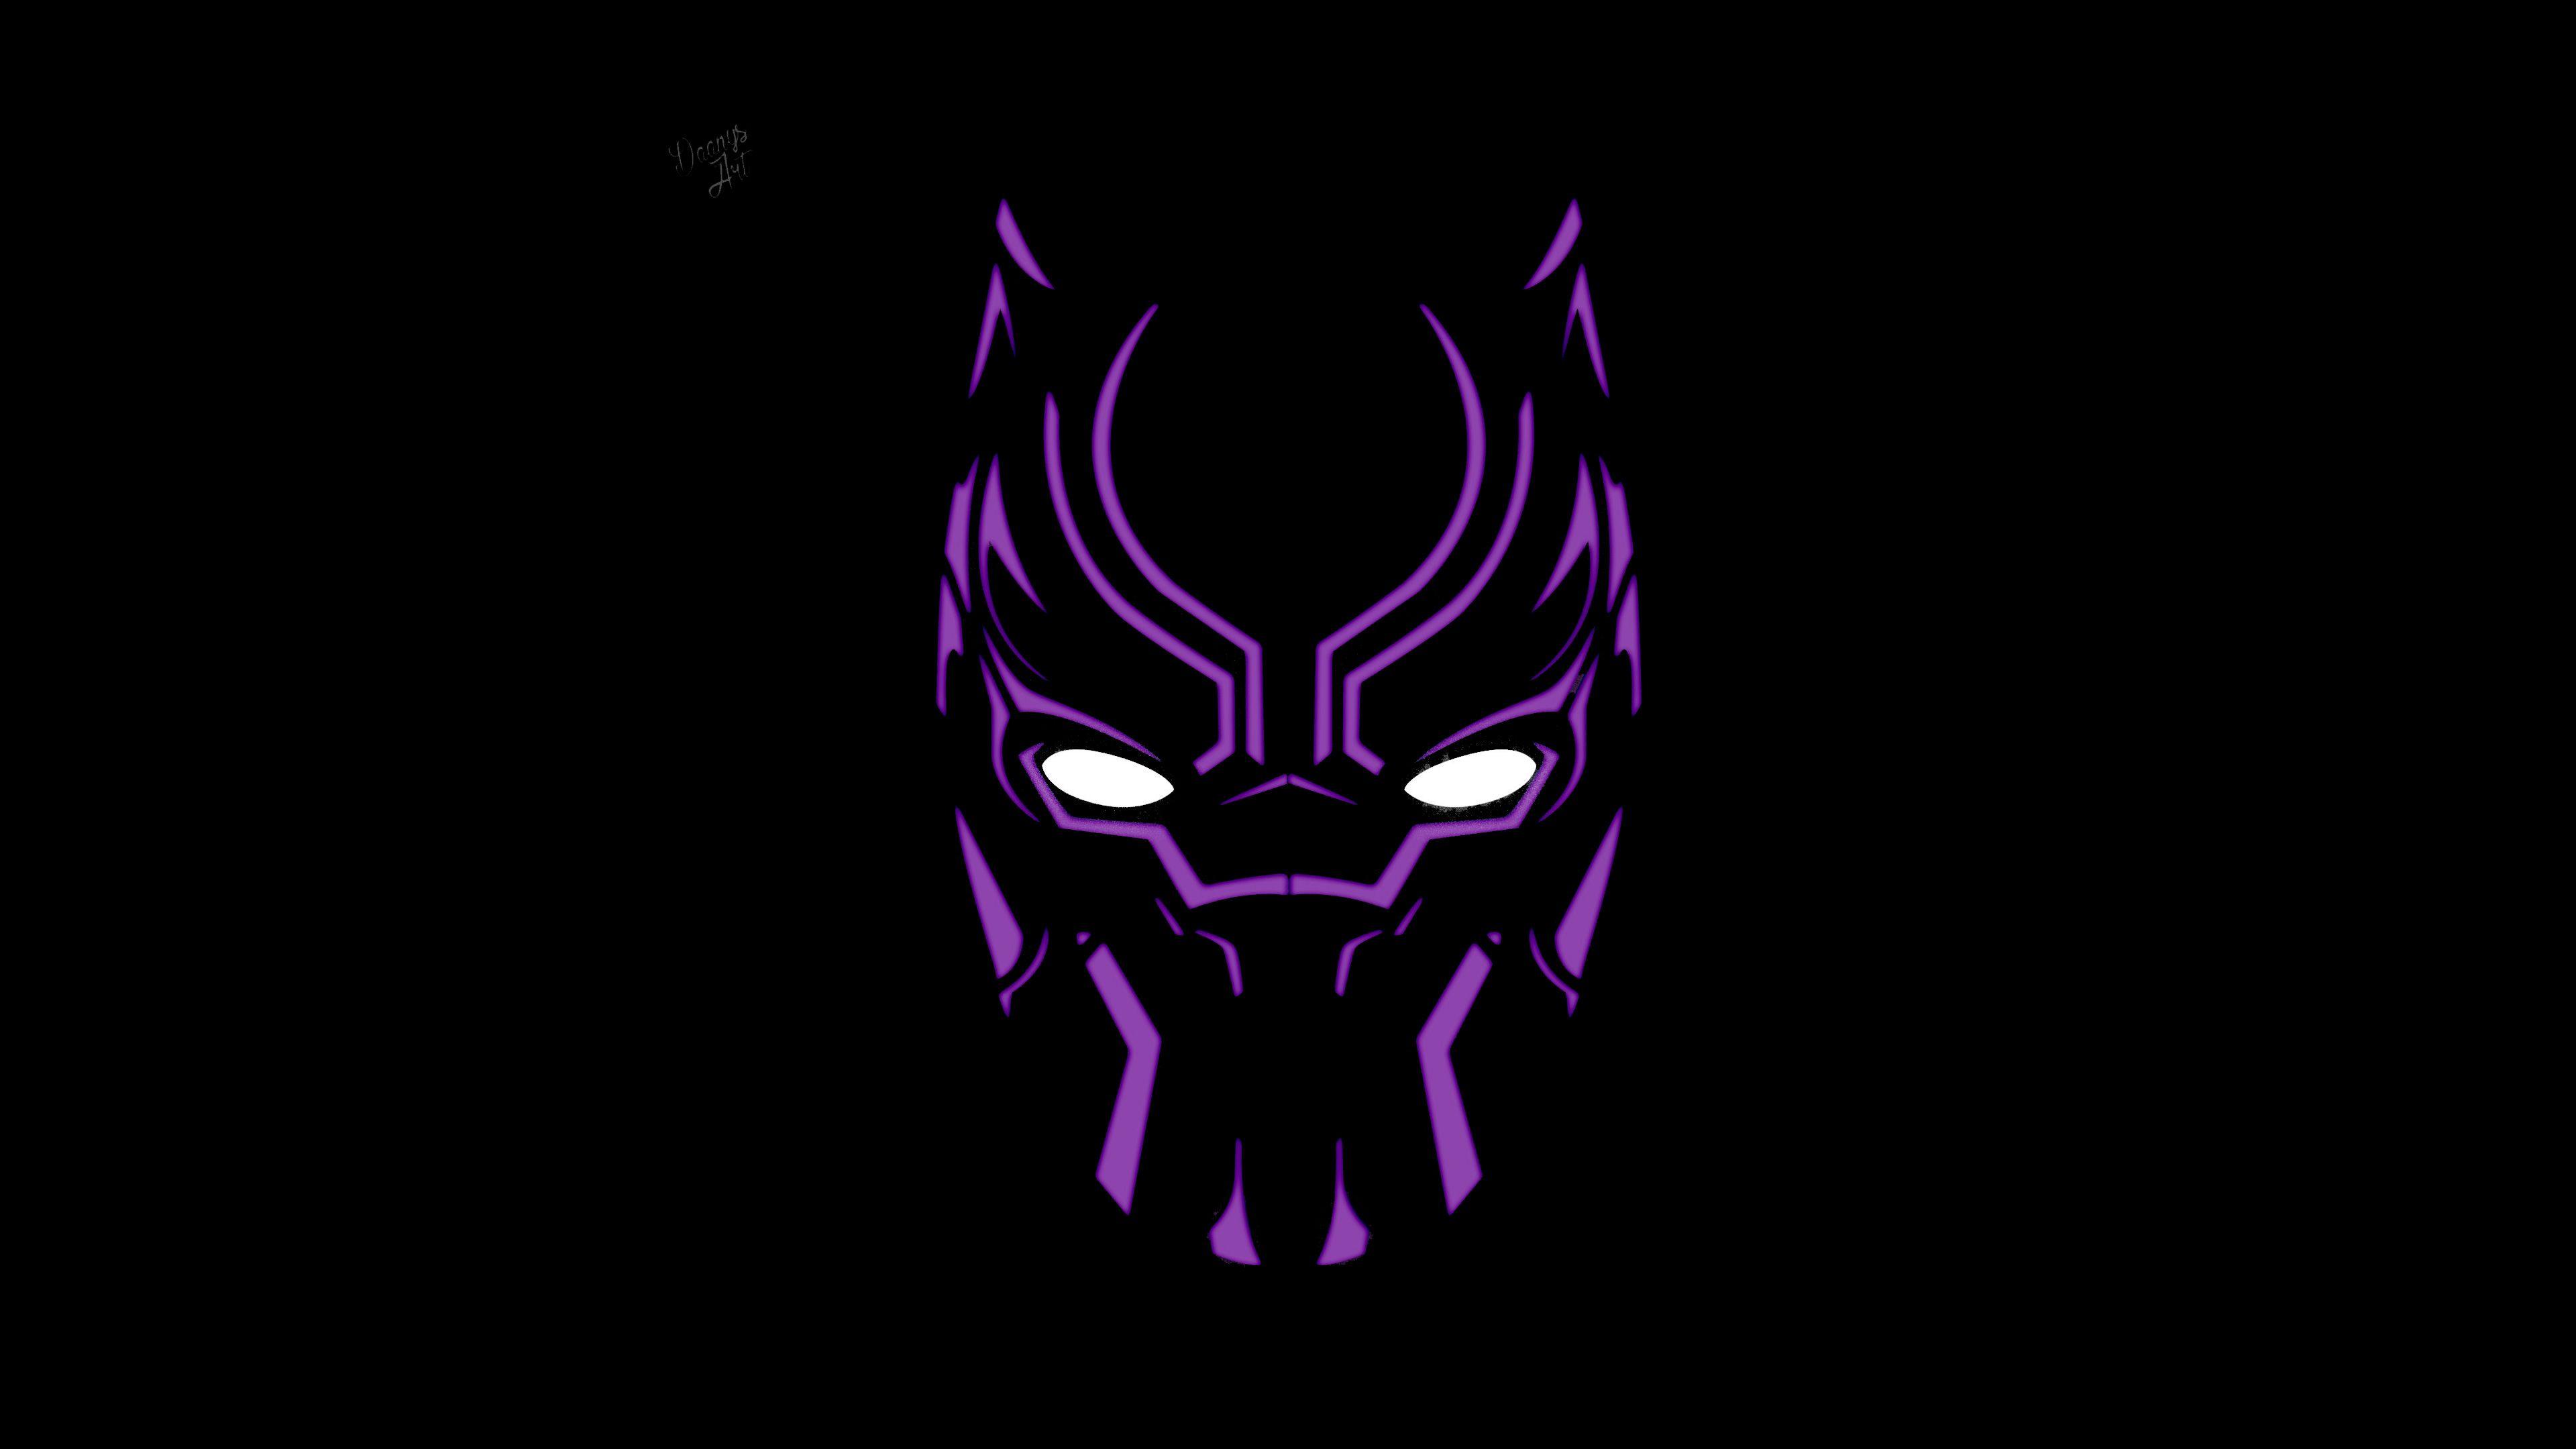 Black Panther 4K Ultra HD Dark Wallpapers - Top Free Black Panther 4K Ultra HD Dark Backgrounds